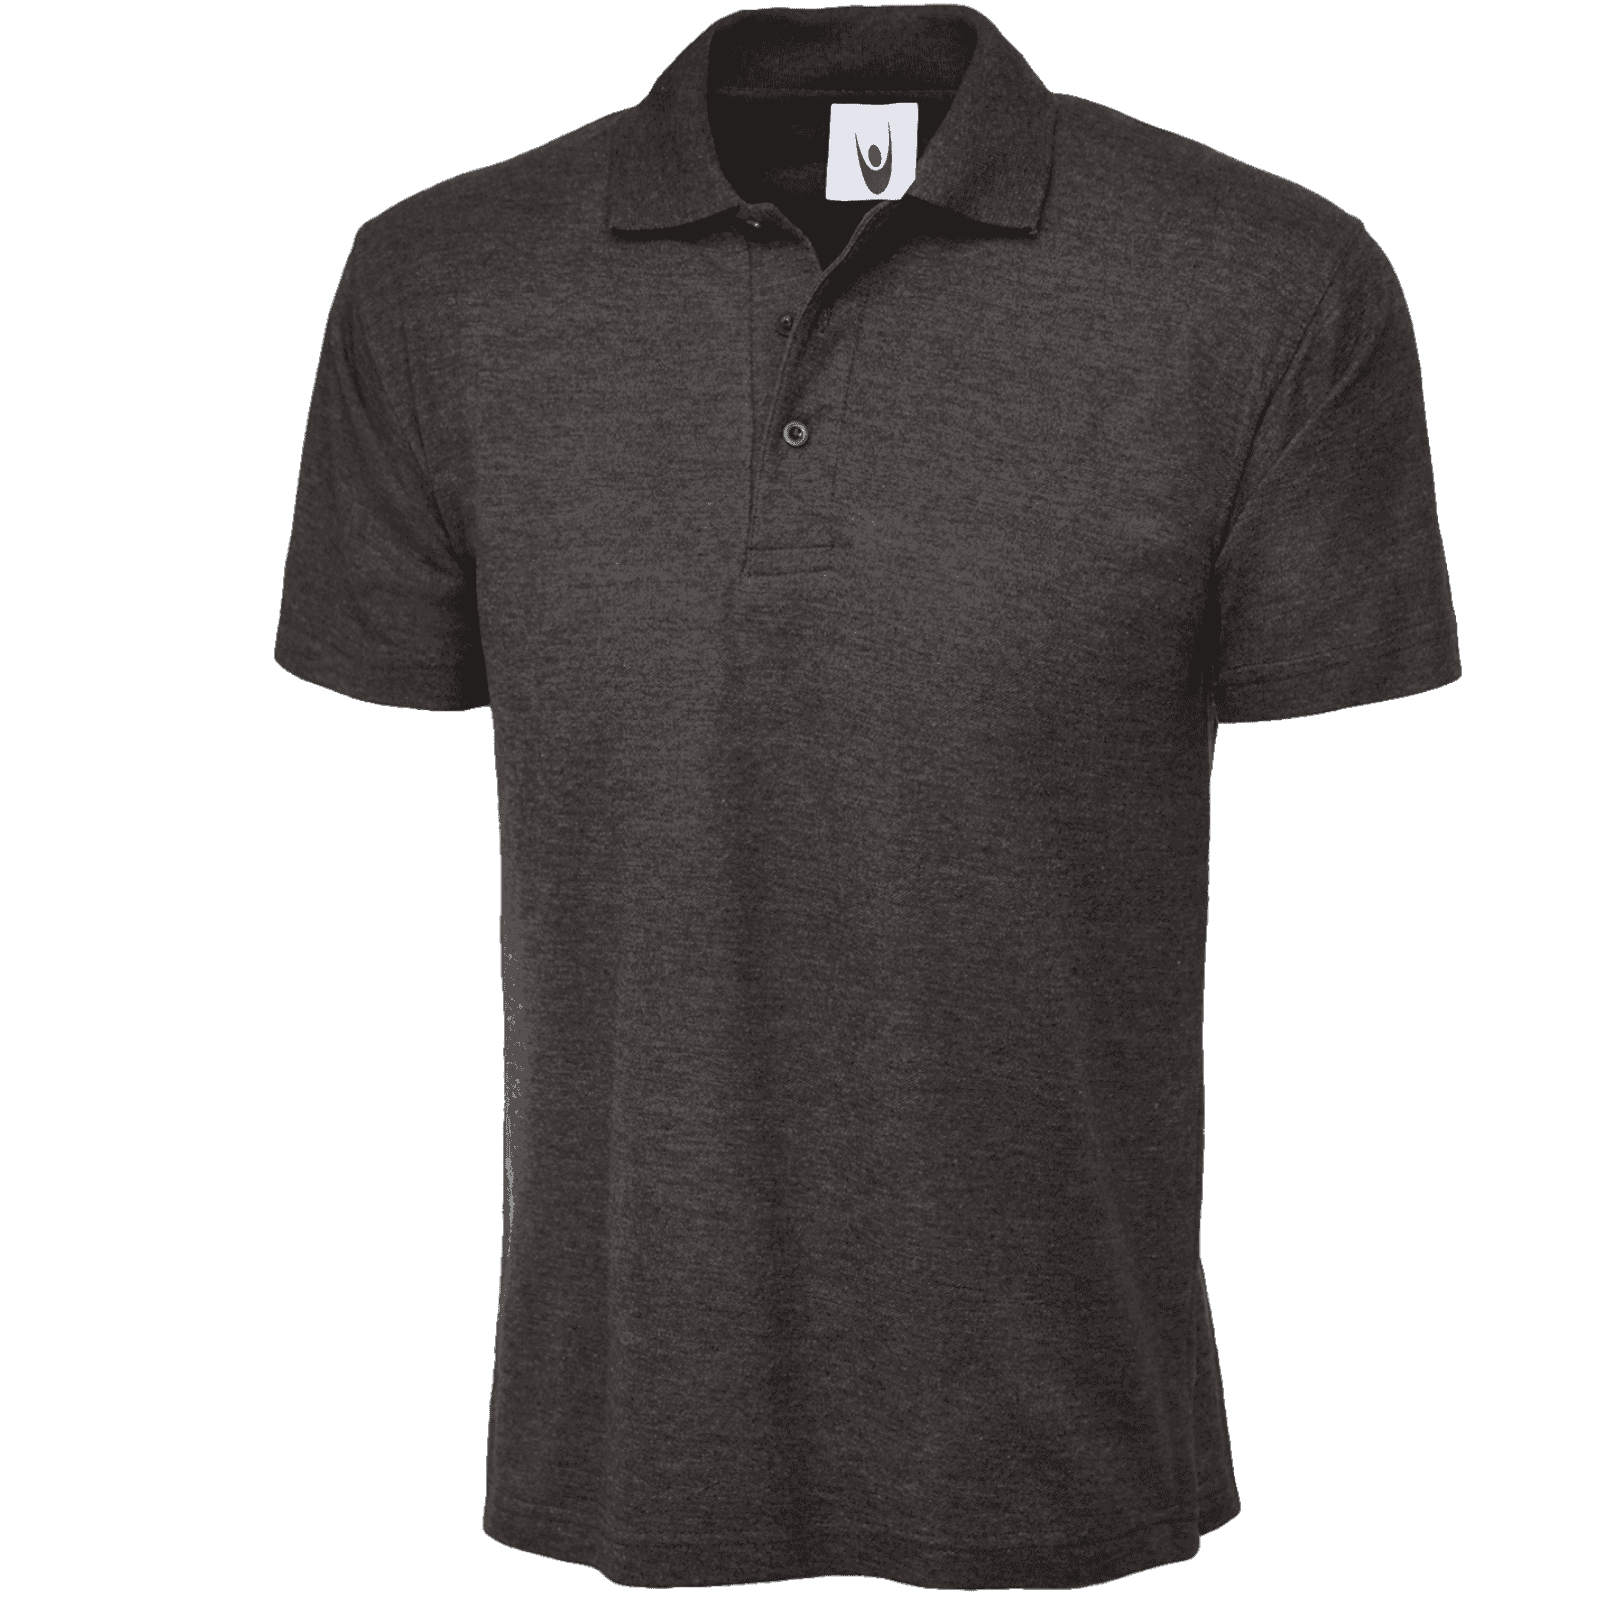 Classic Work Polo Shirt Uneek Clothing UC101